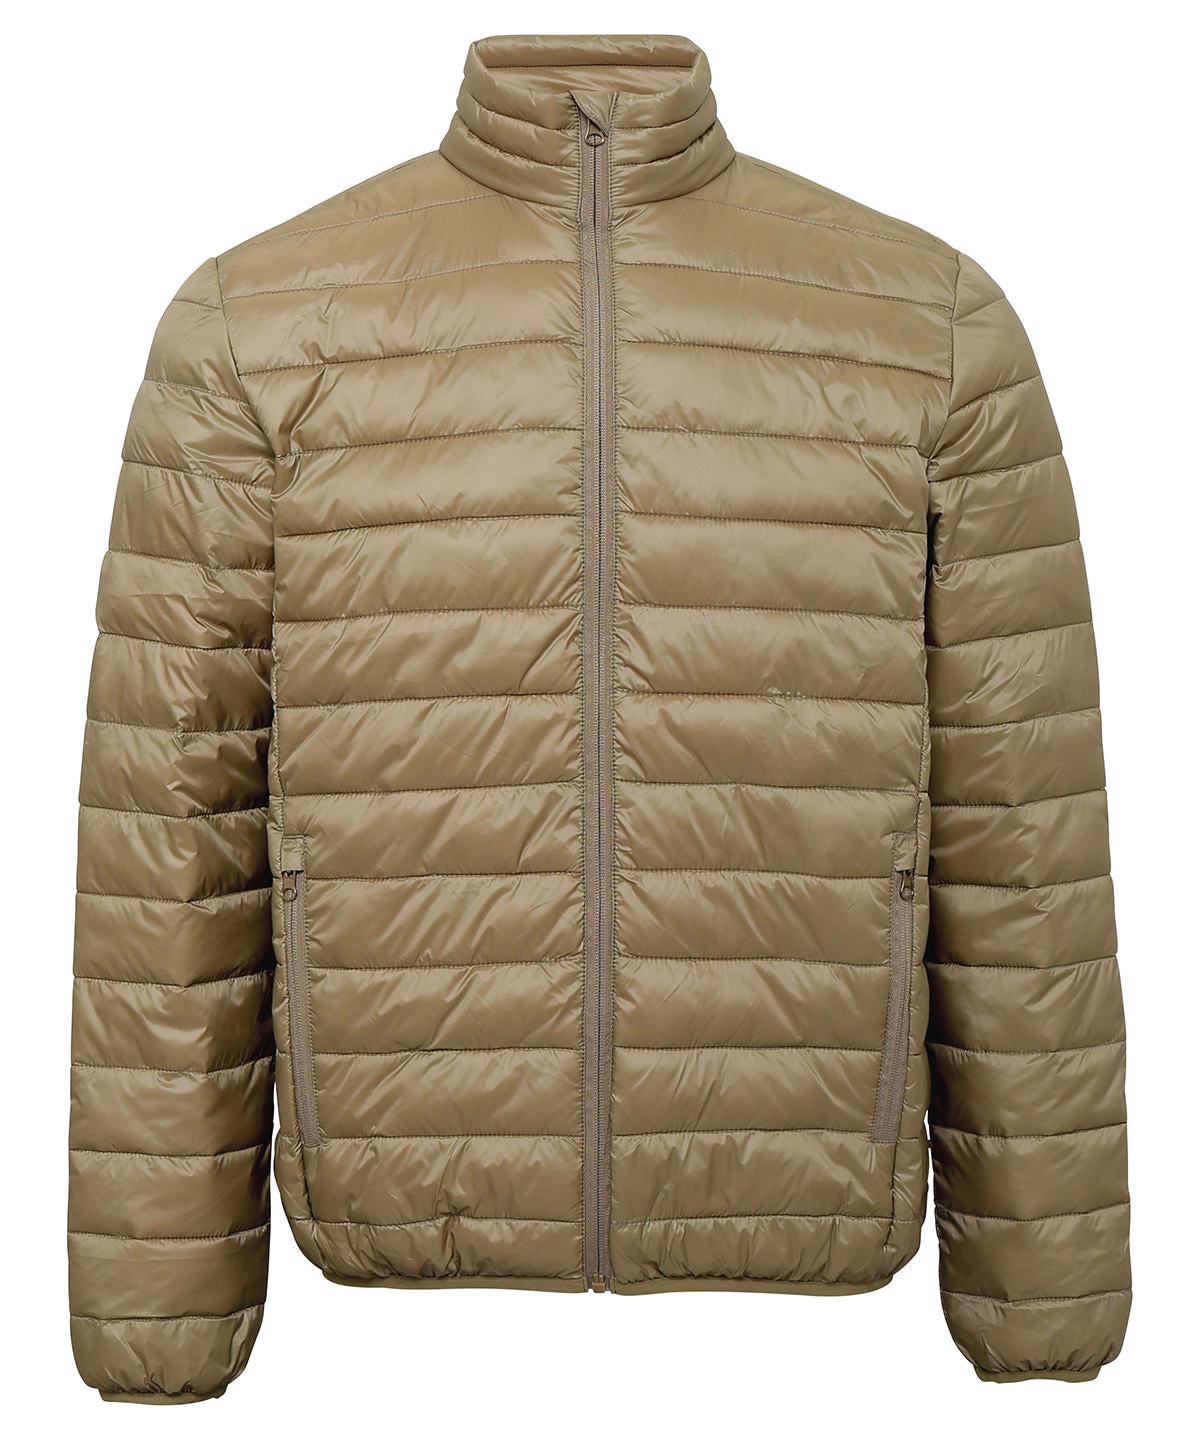 Personalised Jackets - Black 2786 Terrain padded jacket